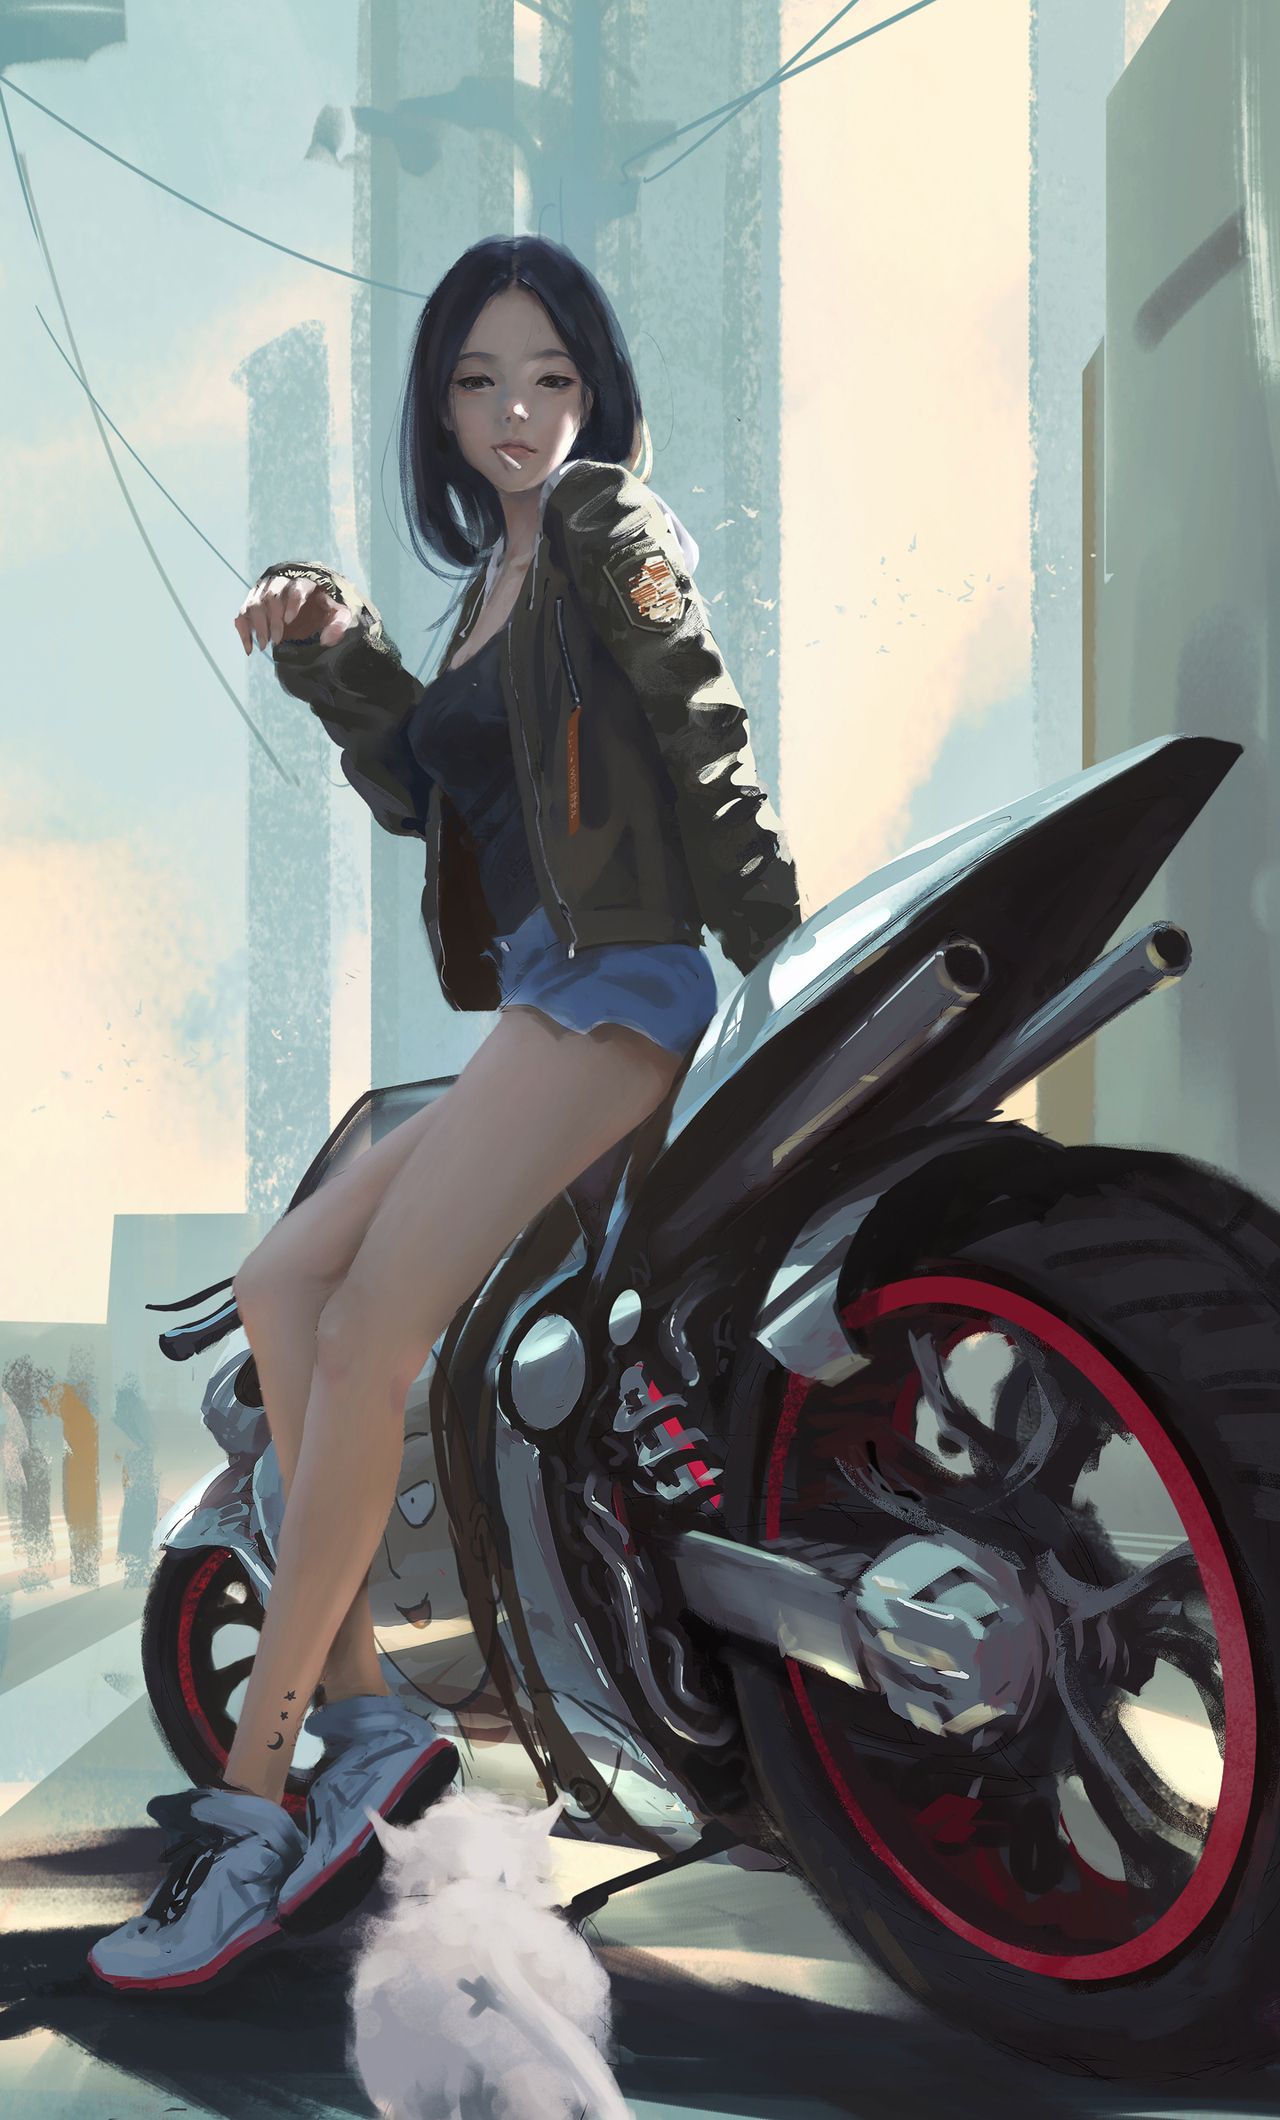 Anime Biker Girl iPhone HD 4k Wallpaper, Image